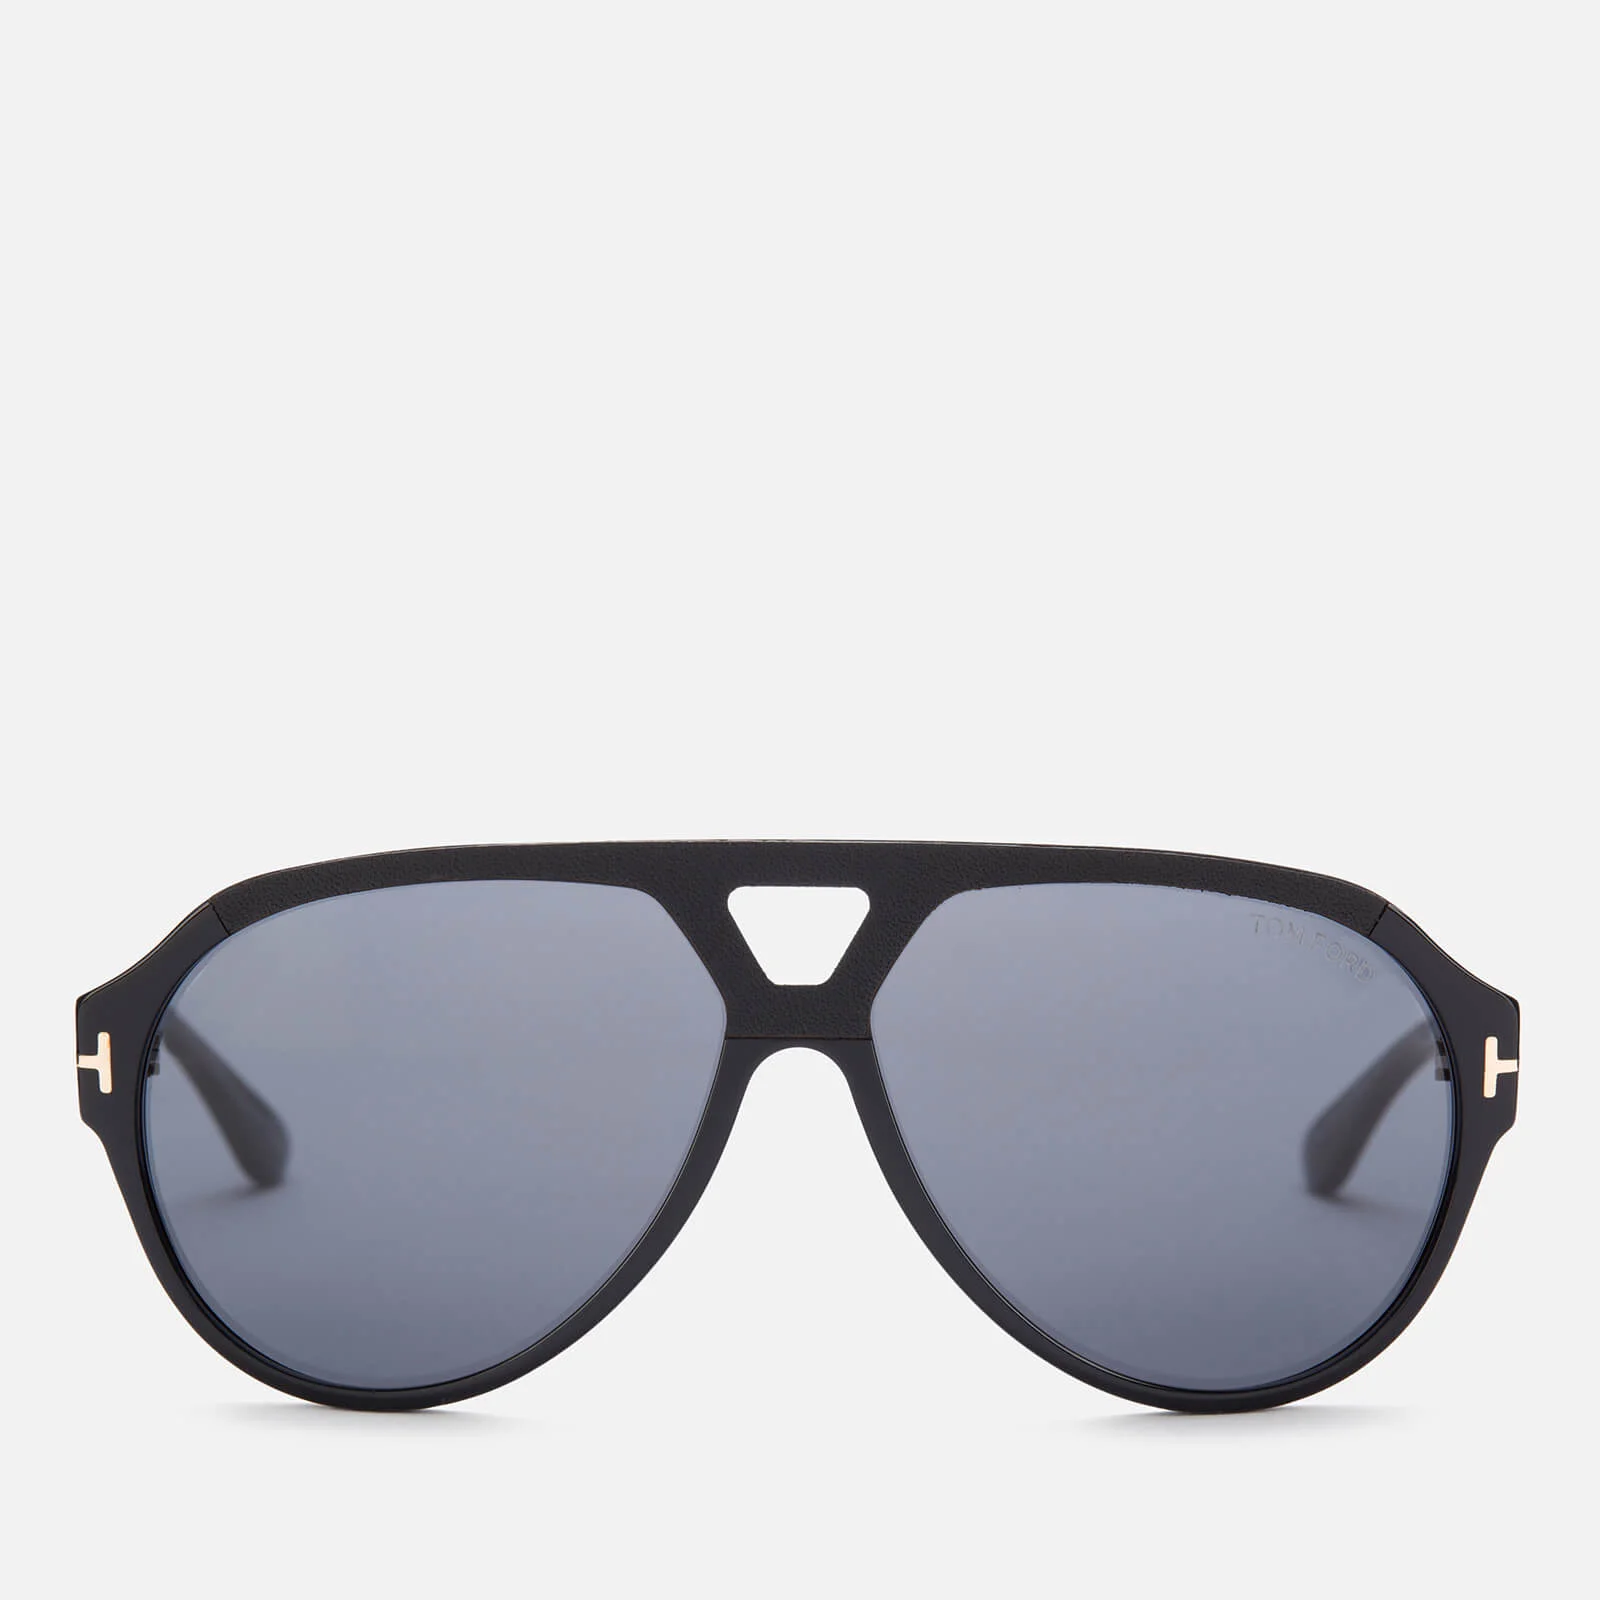 Tom Ford Men's Paul Pilot Sunglasses - Black Image 1